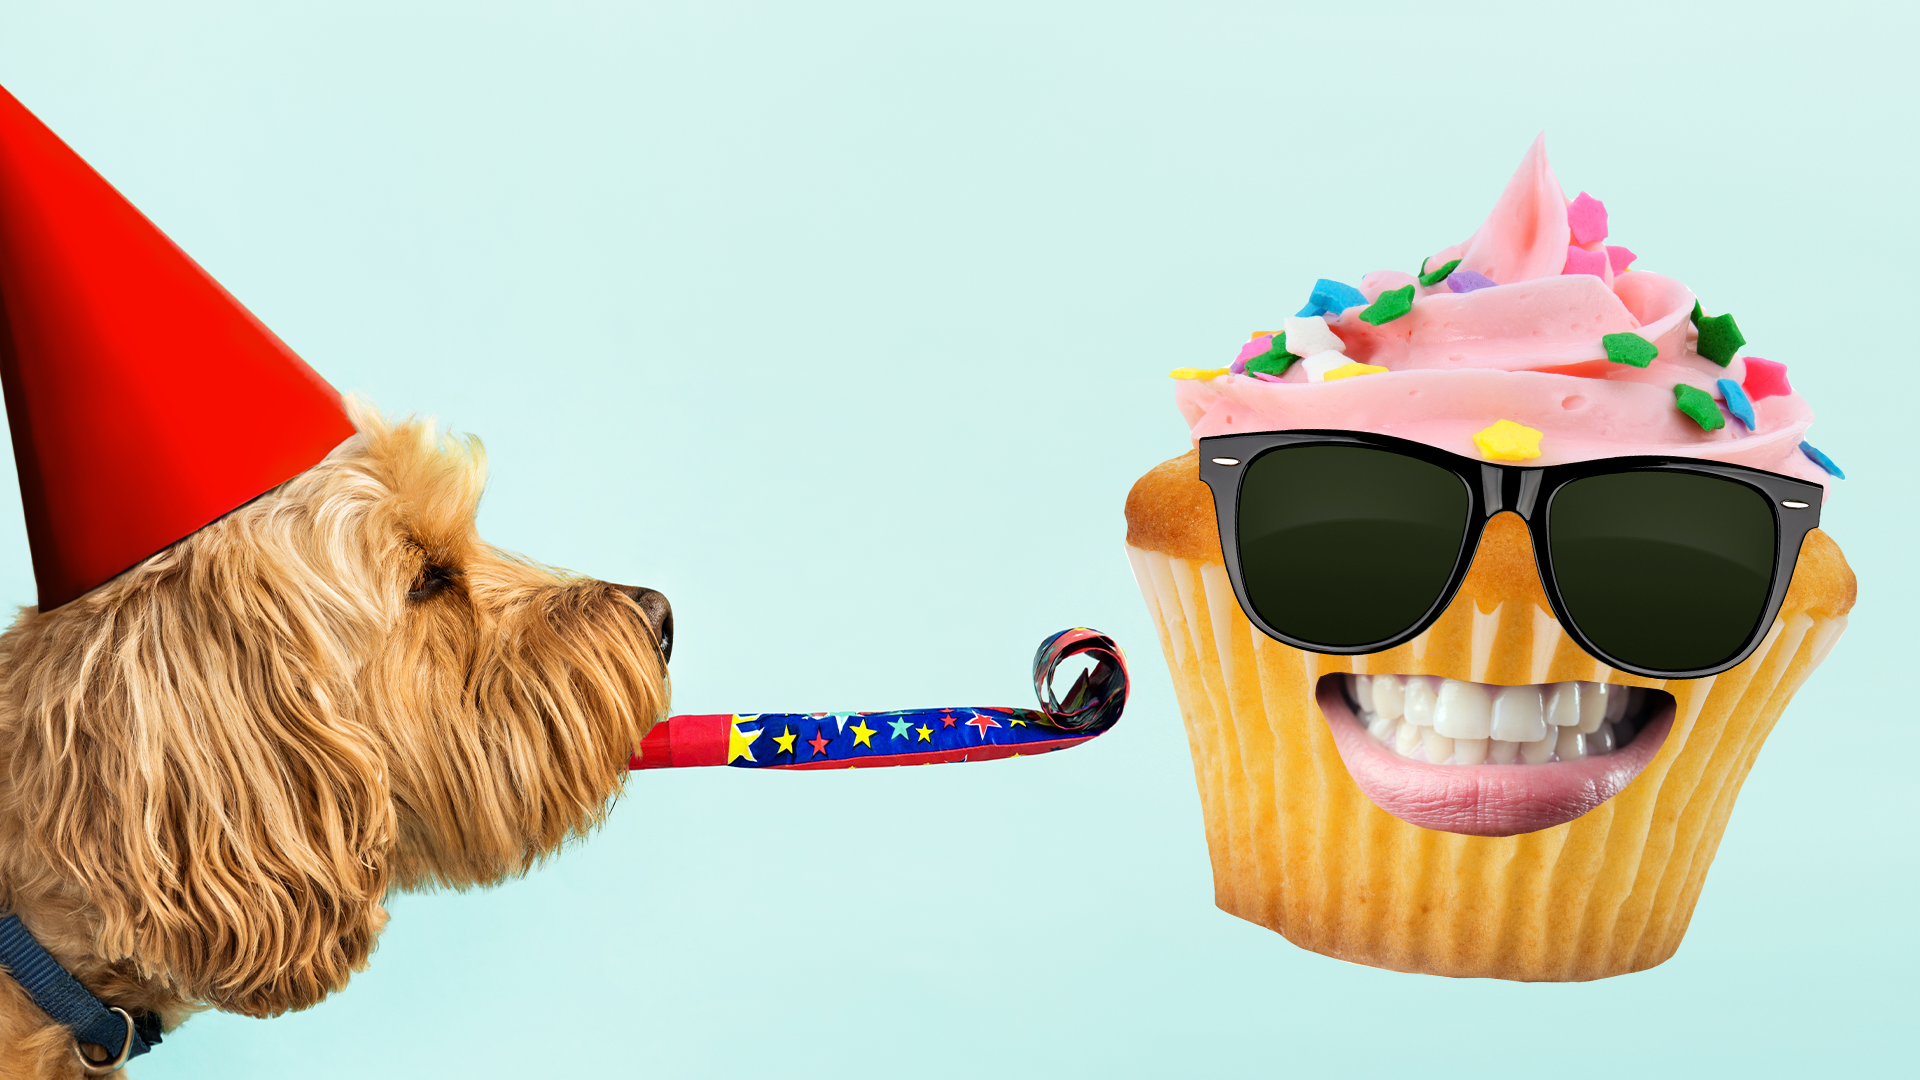 Birthday dog and cupcake